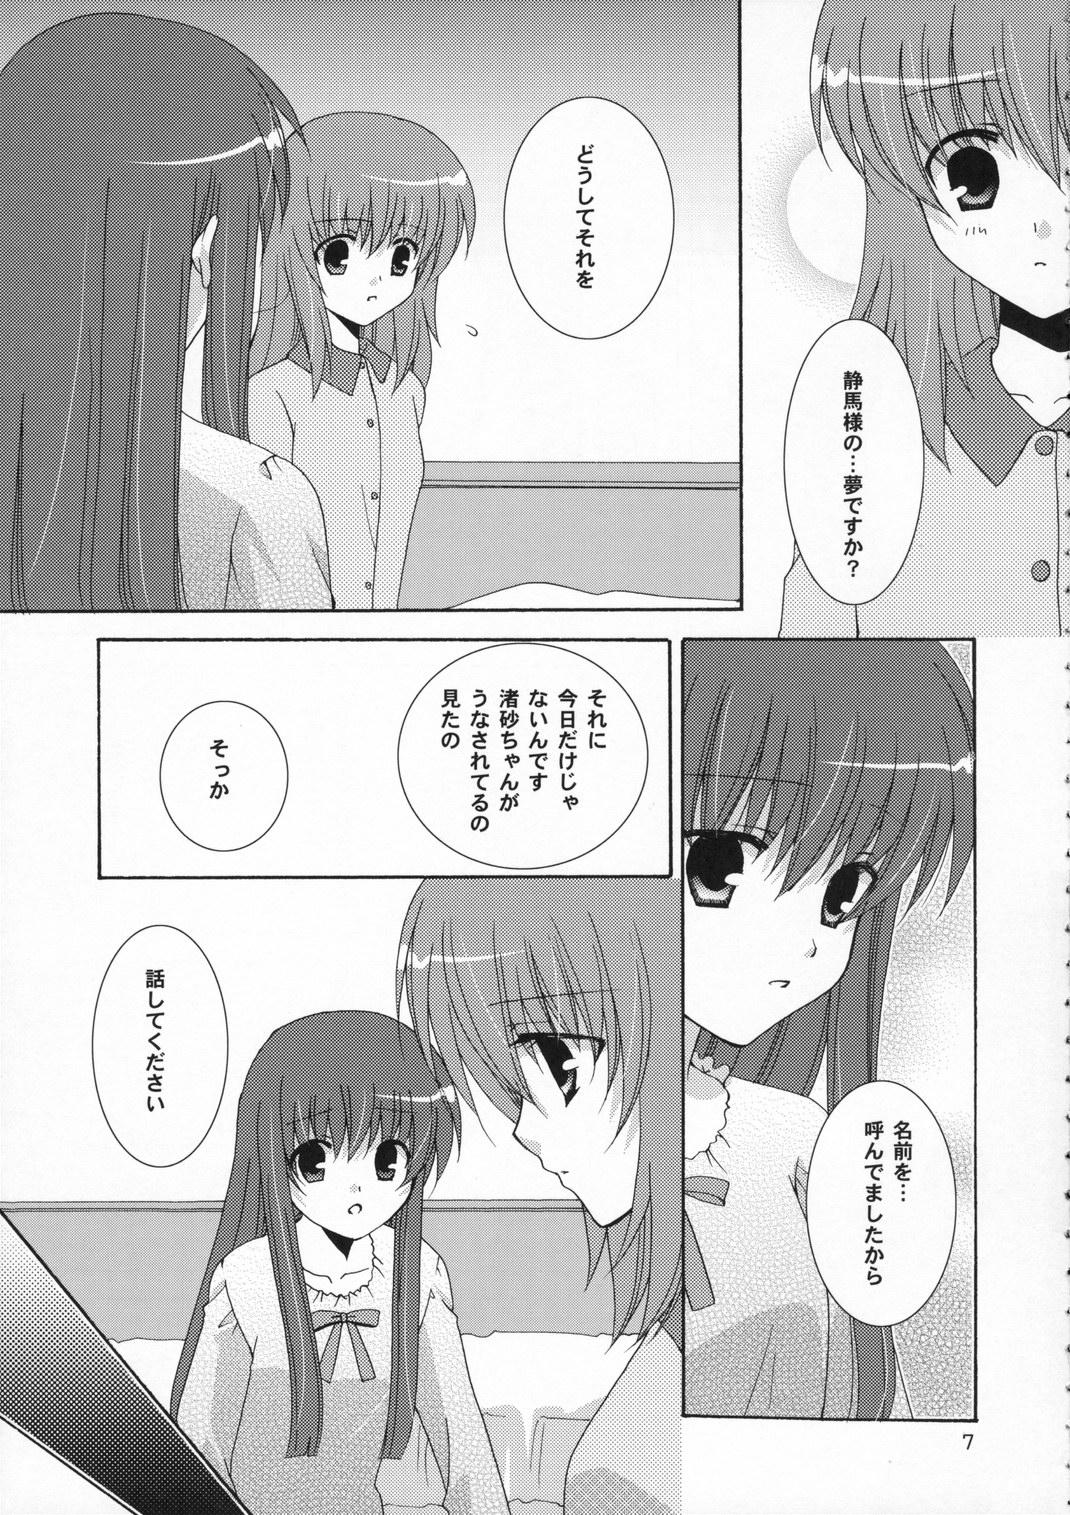 Sister Ichigo no Kimochi - Strawberry panic Gang - Page 7